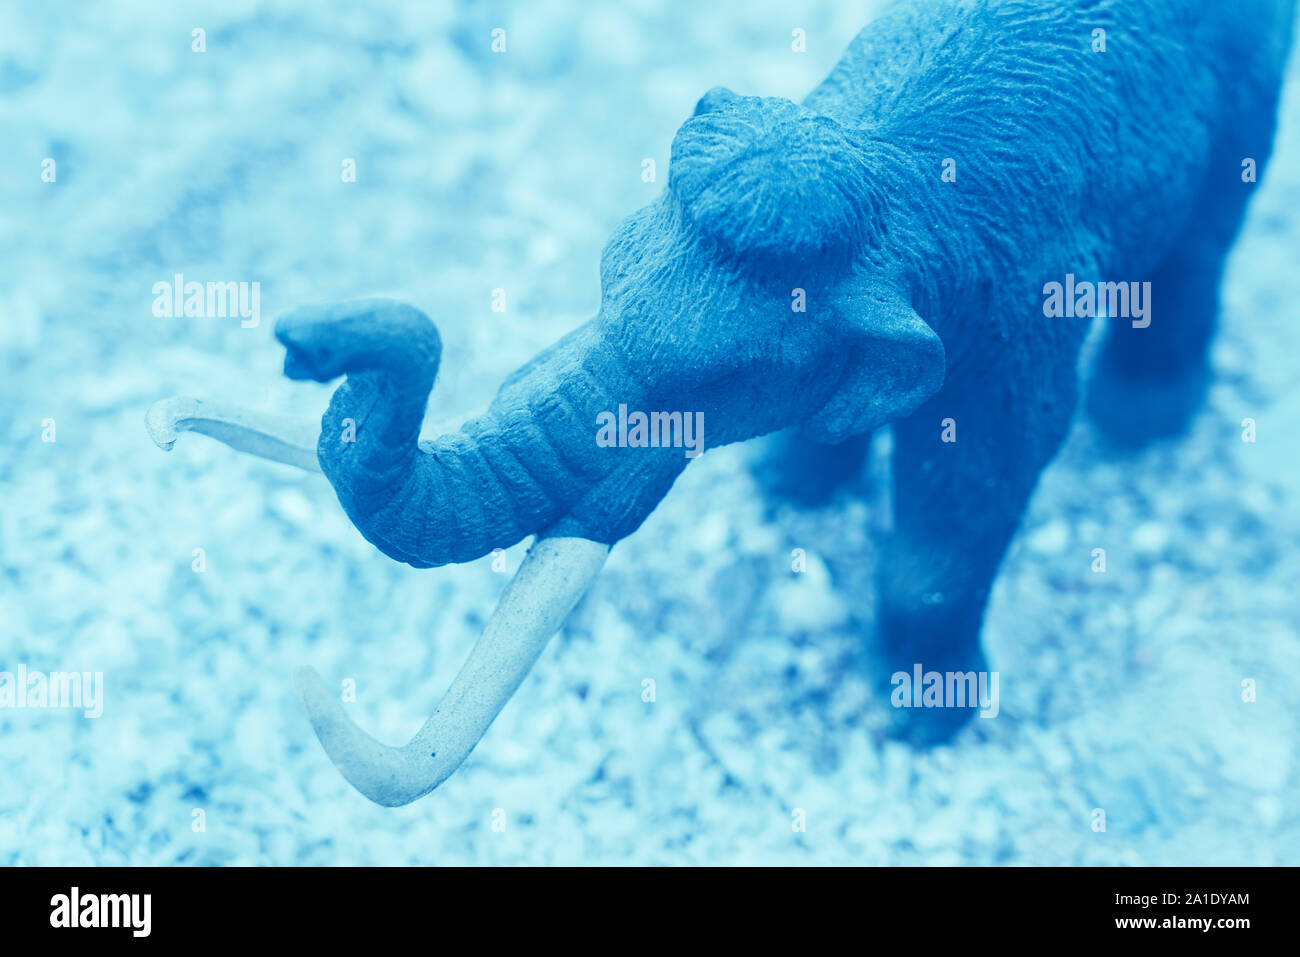 Modelo en miniatura de un mamut, vista panorámica Foto de stock